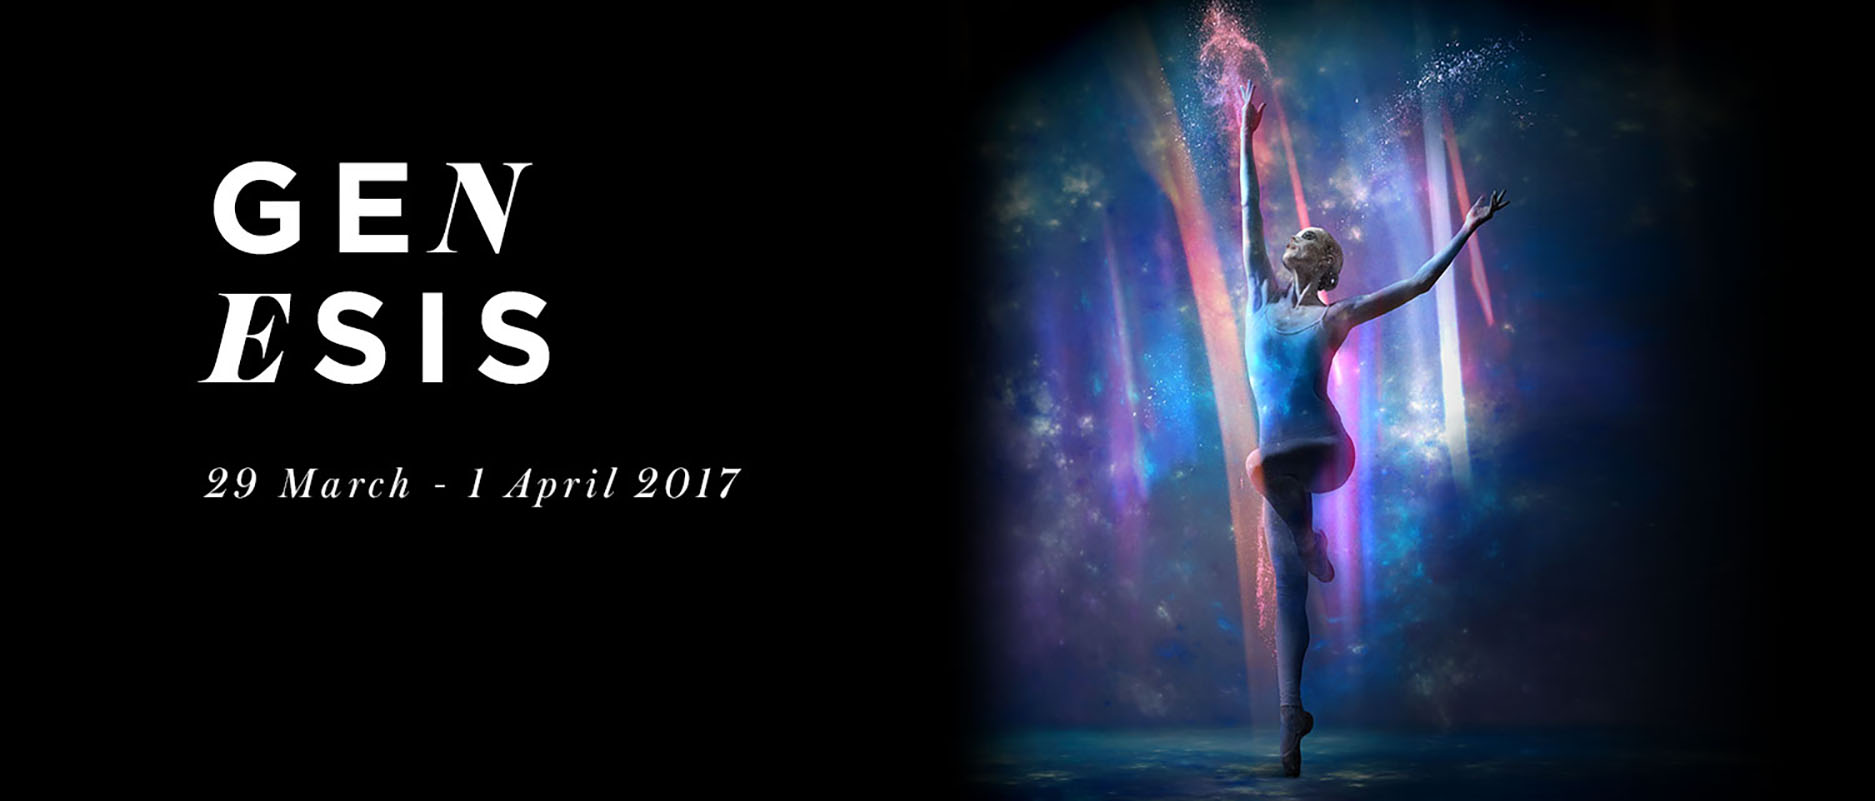 GENESIS2017 WA Ballet